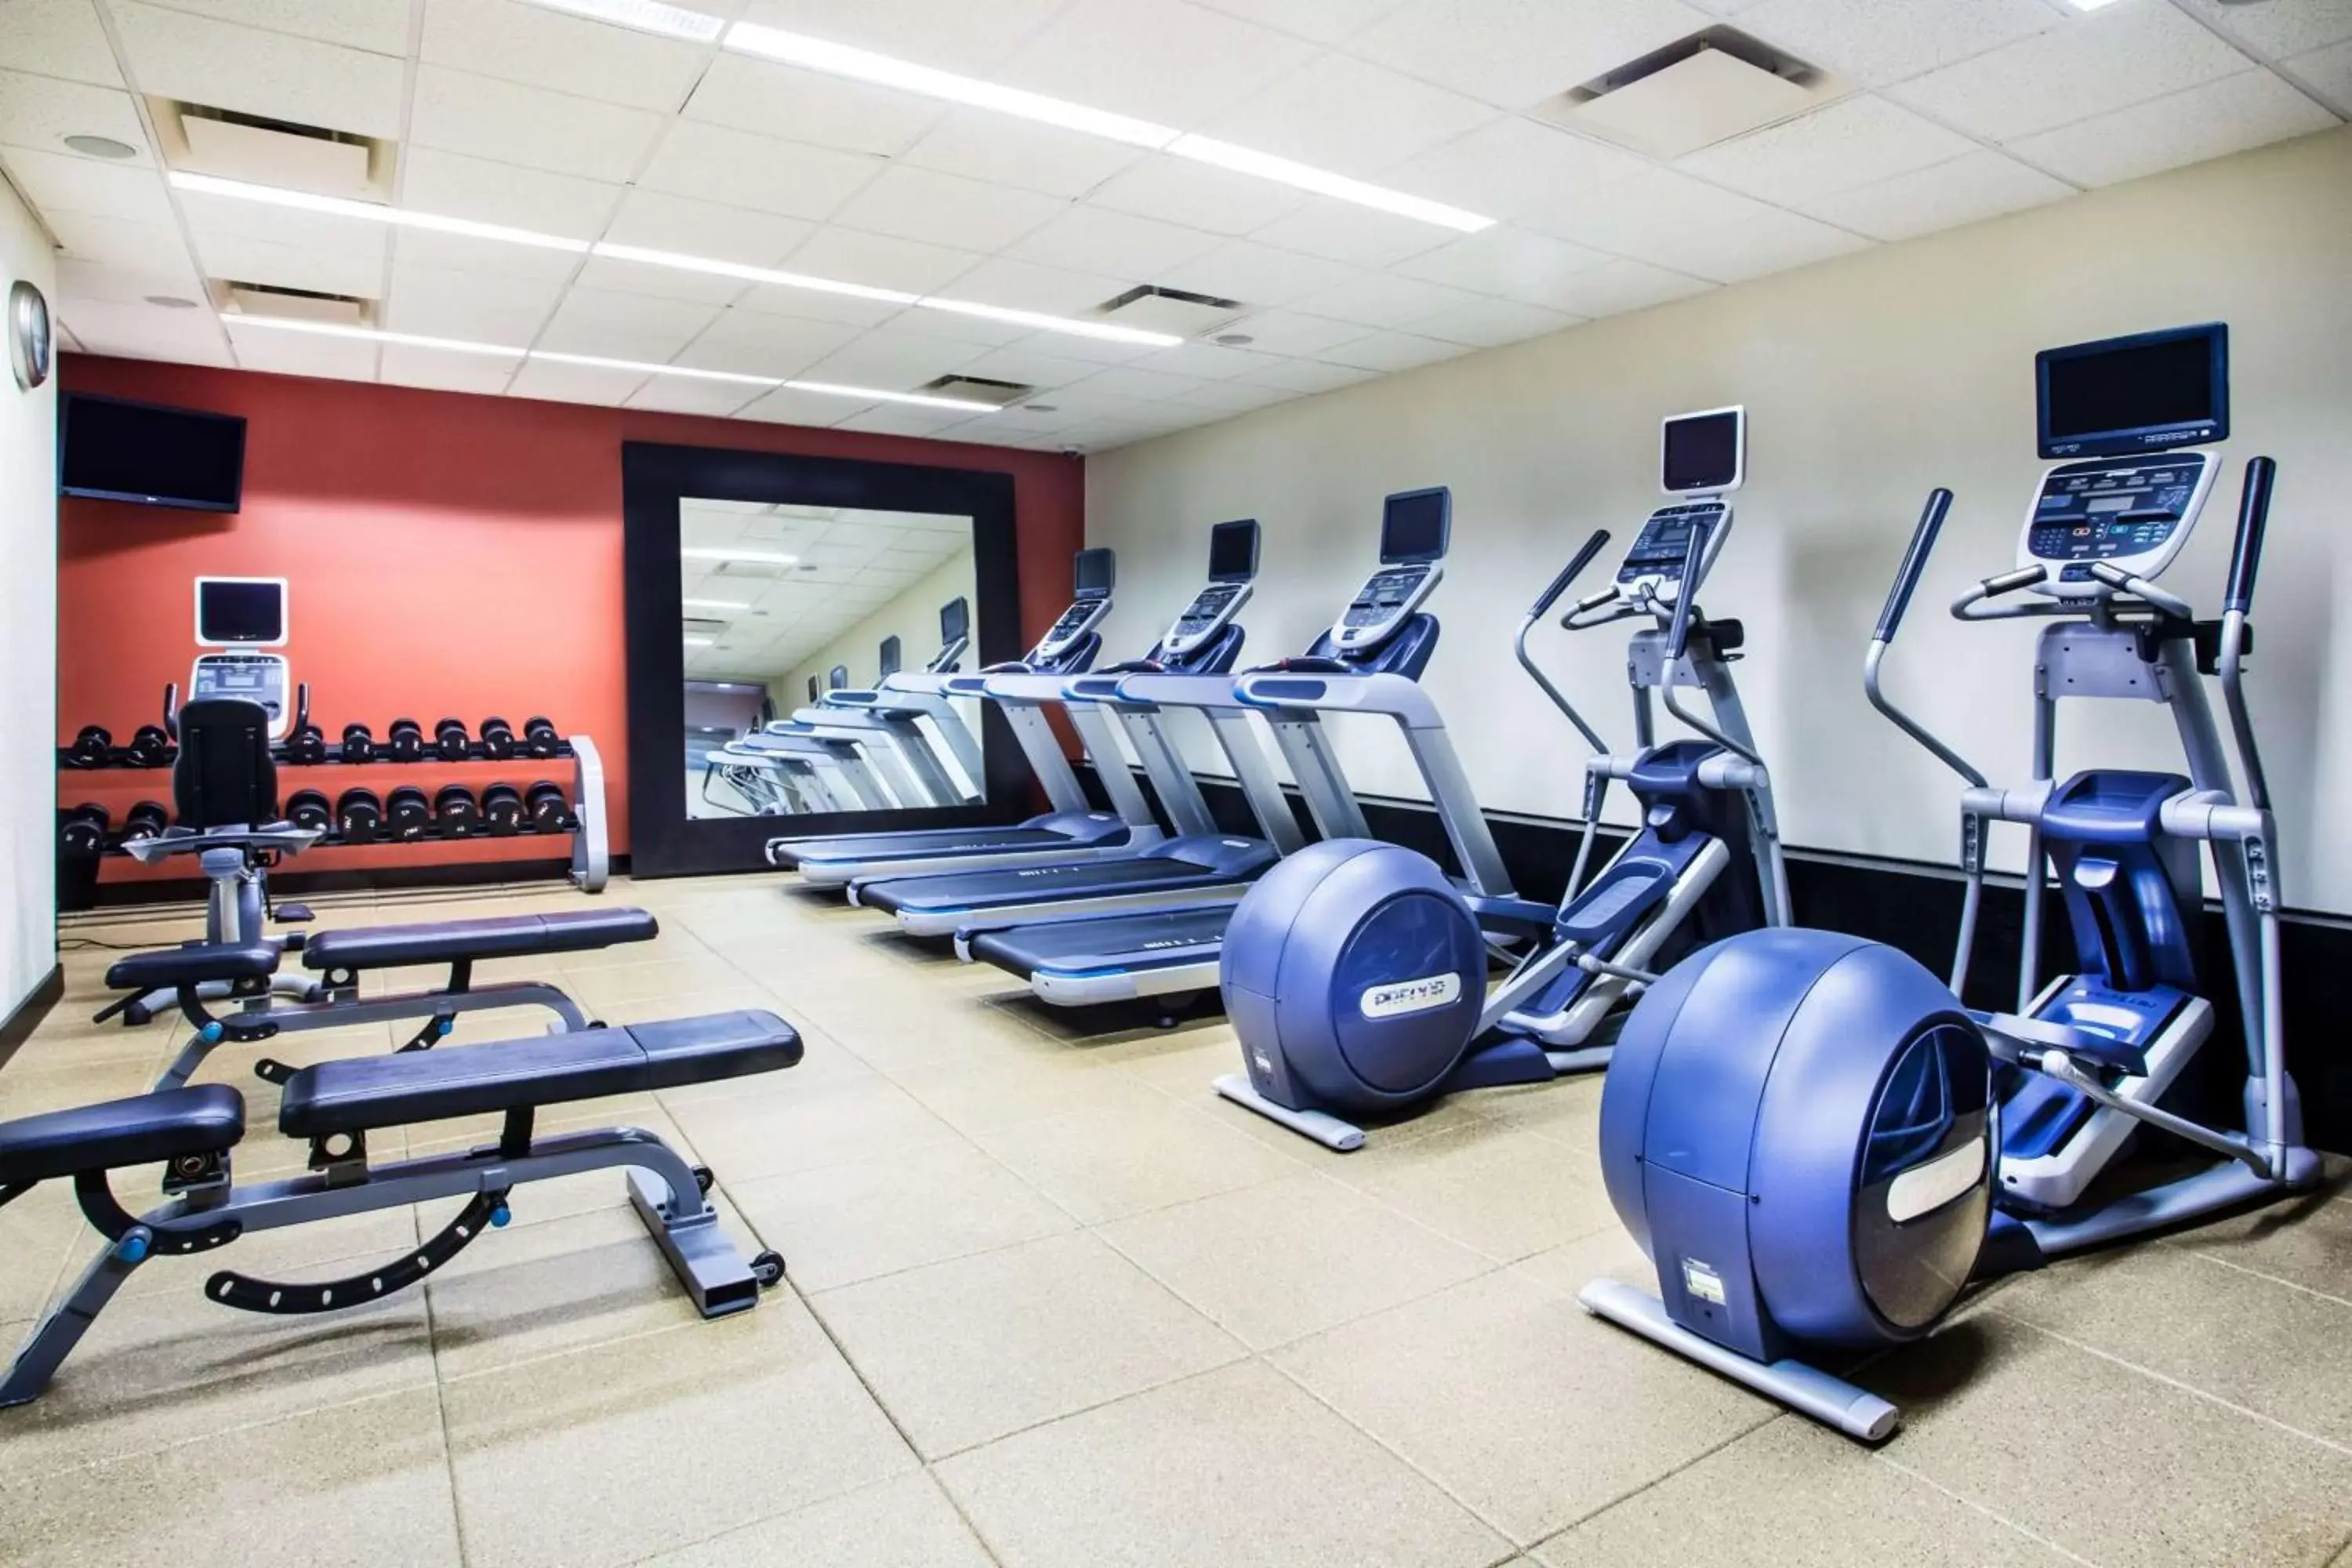 Fitness centre/facilities, Fitness Center/Facilities in Hilton Garden Inn West 35th Street